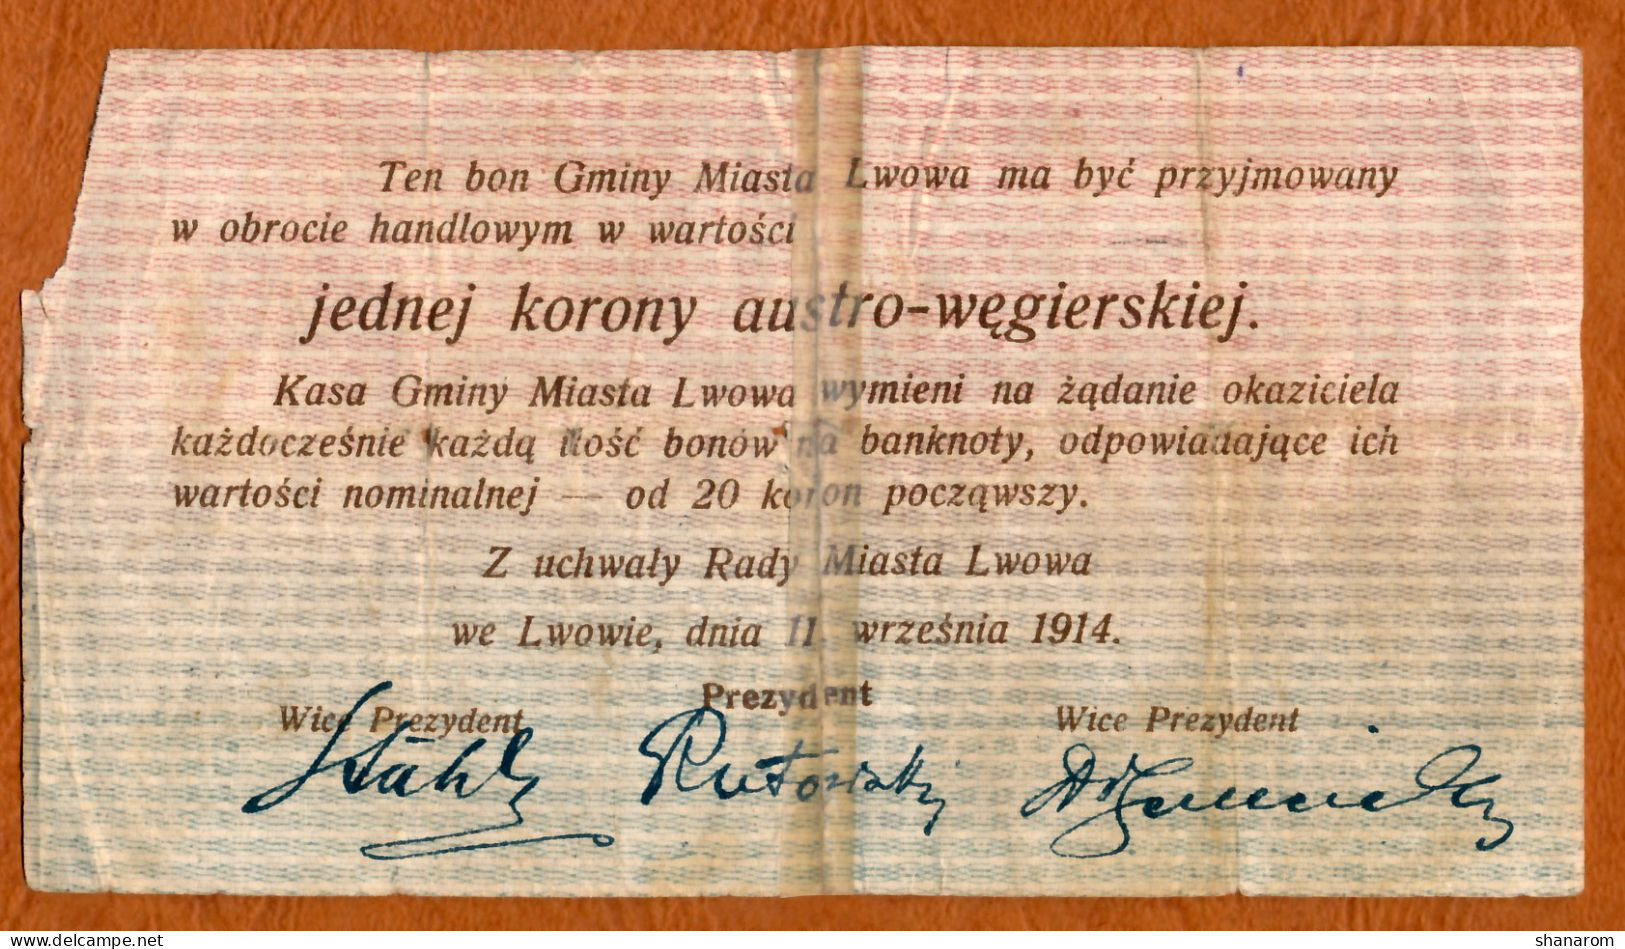 1914 // POLOGNE // JEDNA KORONA - Poland